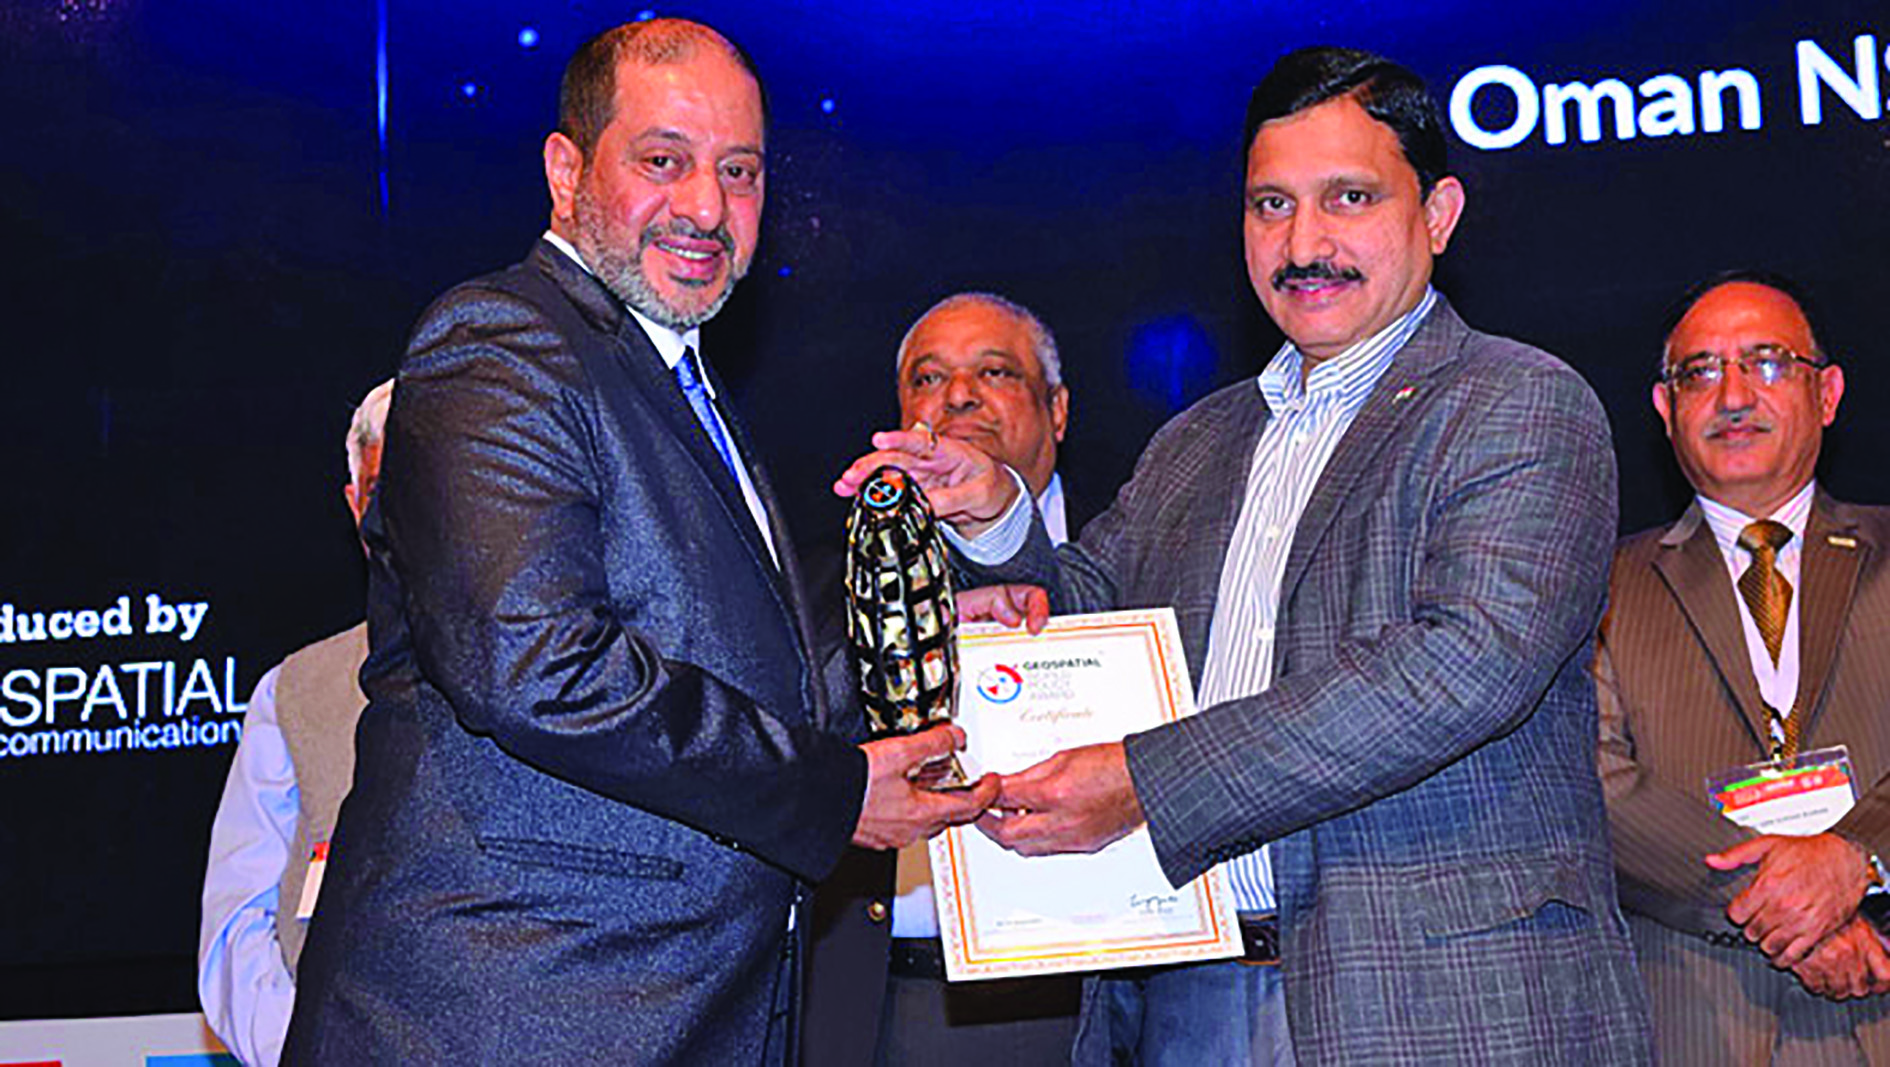 This Omani government programme just won an international award